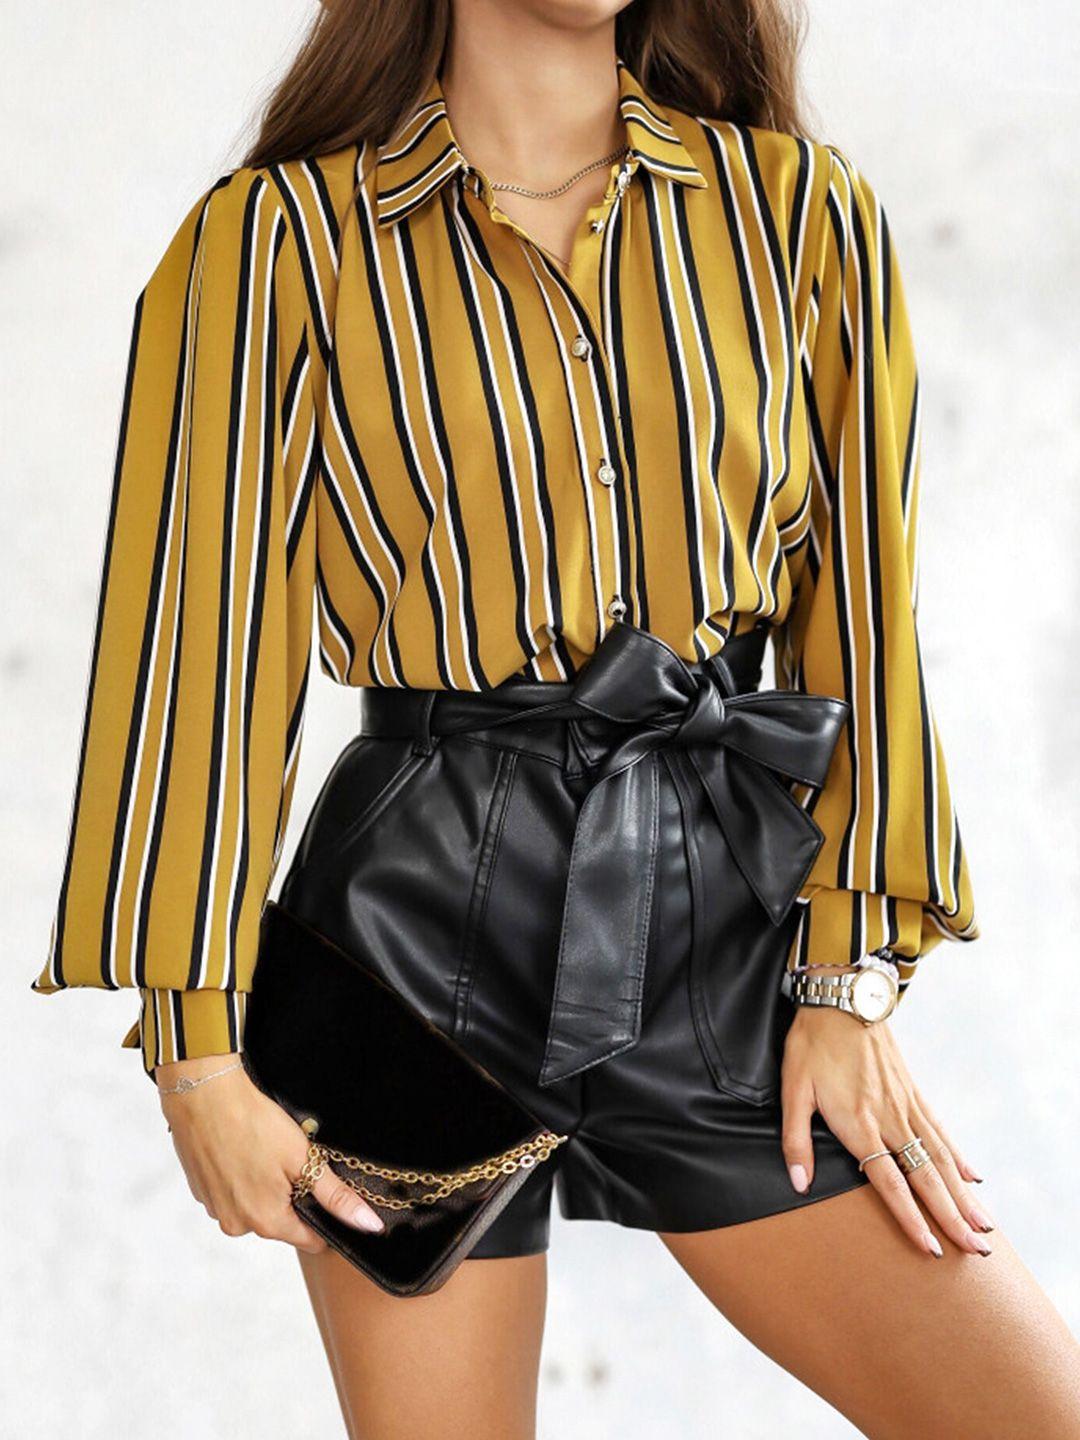 lulu & sky striped spread collar shirt style top